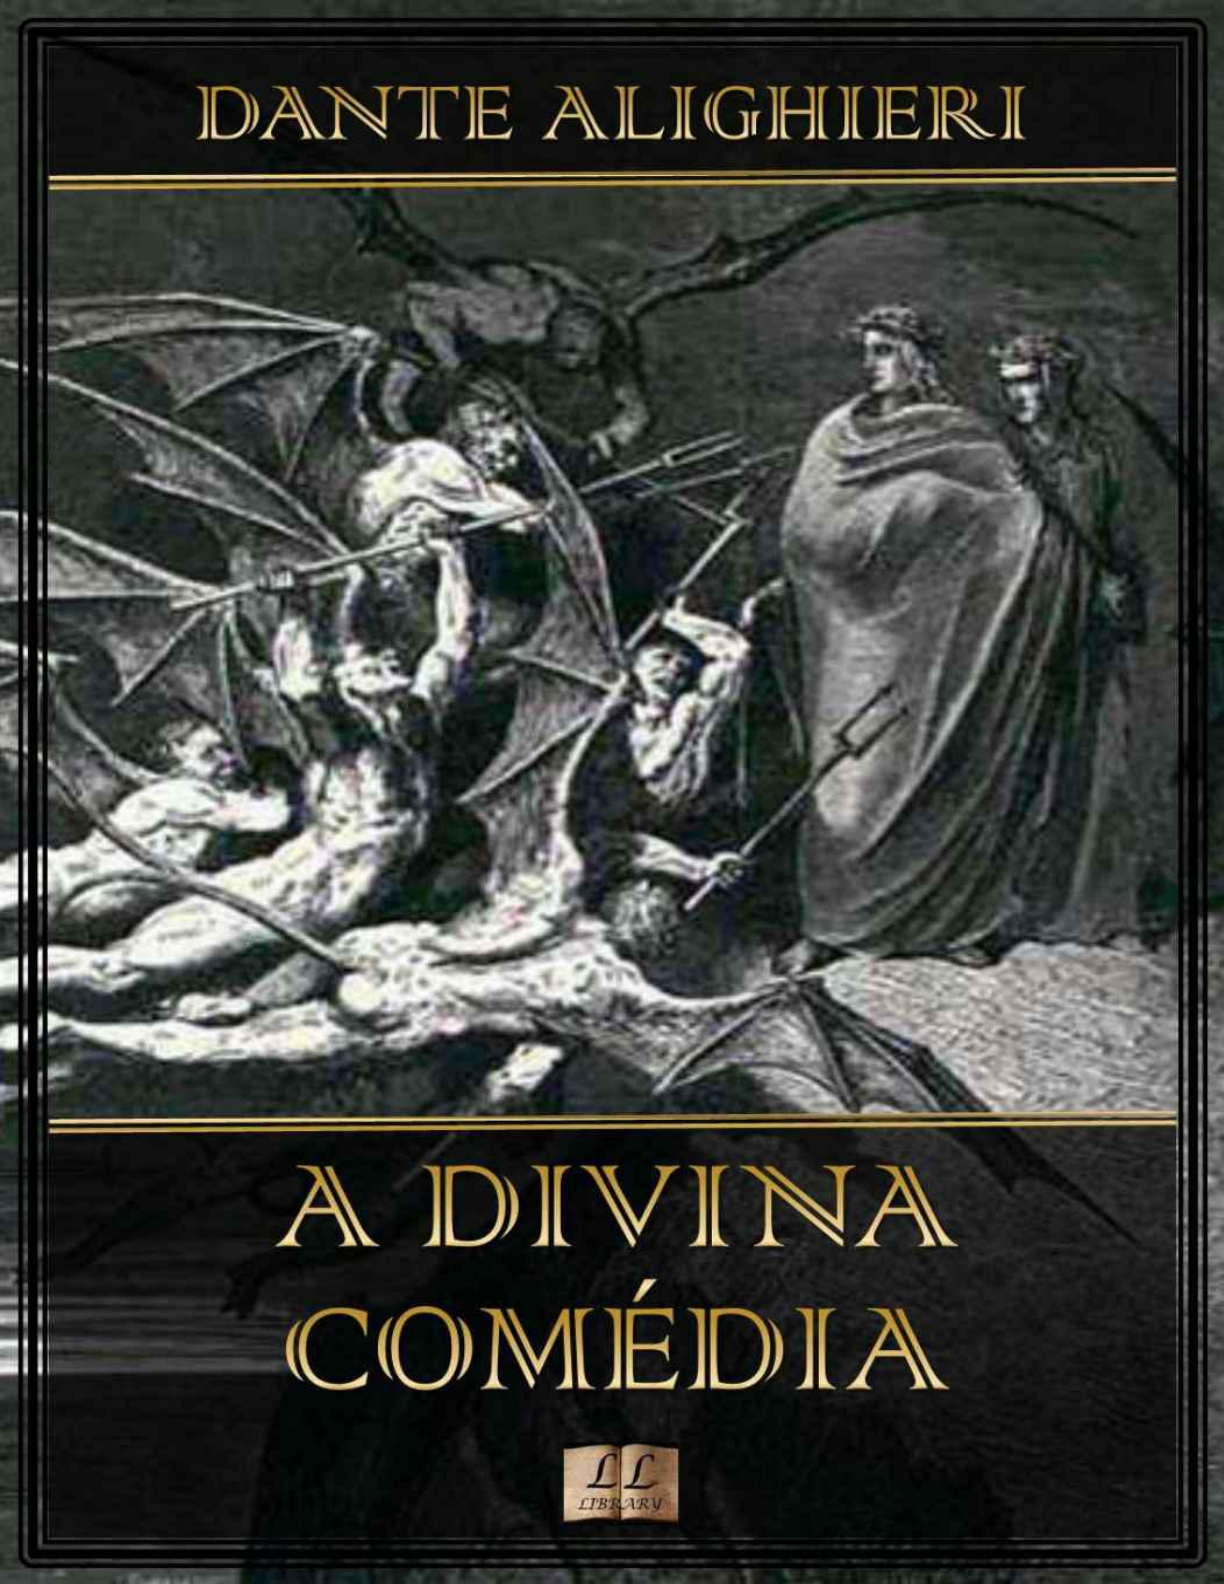 12 ideas de Frases Inferno  la divina comedia, dante divina comedia, dante  alighieri